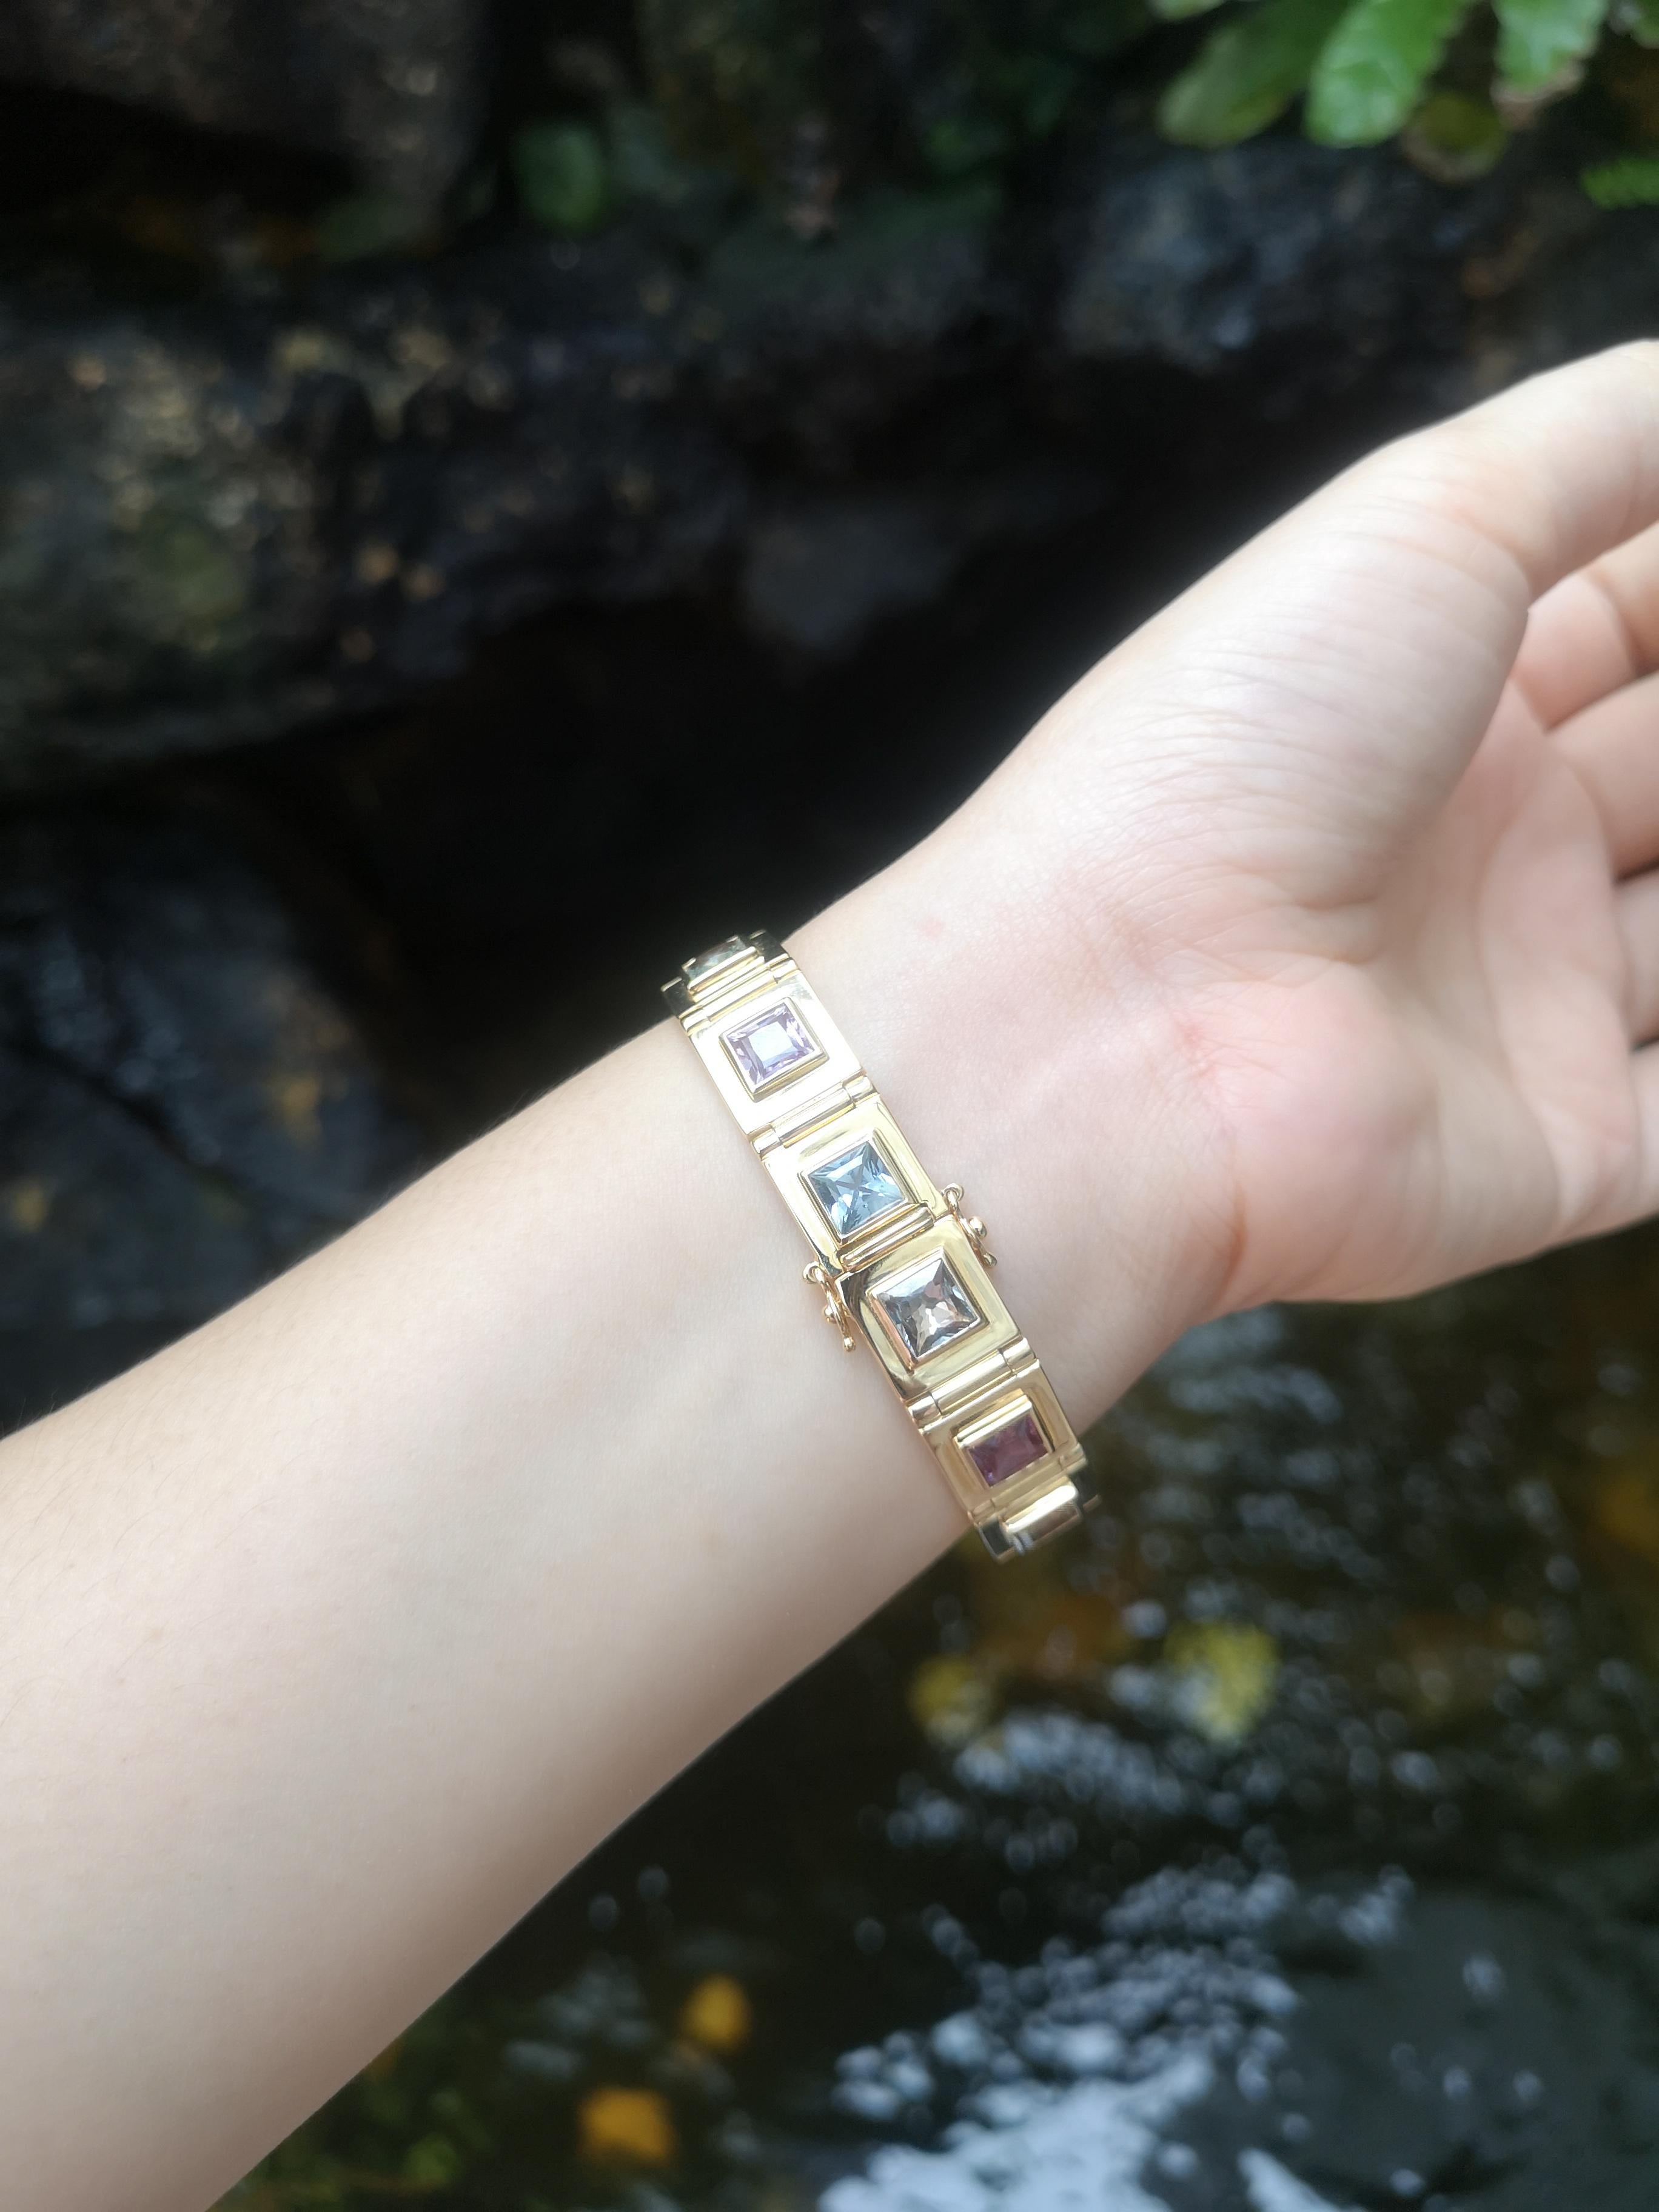 Multi Colour Sapphire 16.98 carats Bracelet set in 18 Karat Gold Settings 

Width:  1.3 cm 
Length: 17.8 cm
Total Weight: 60.54 grams

